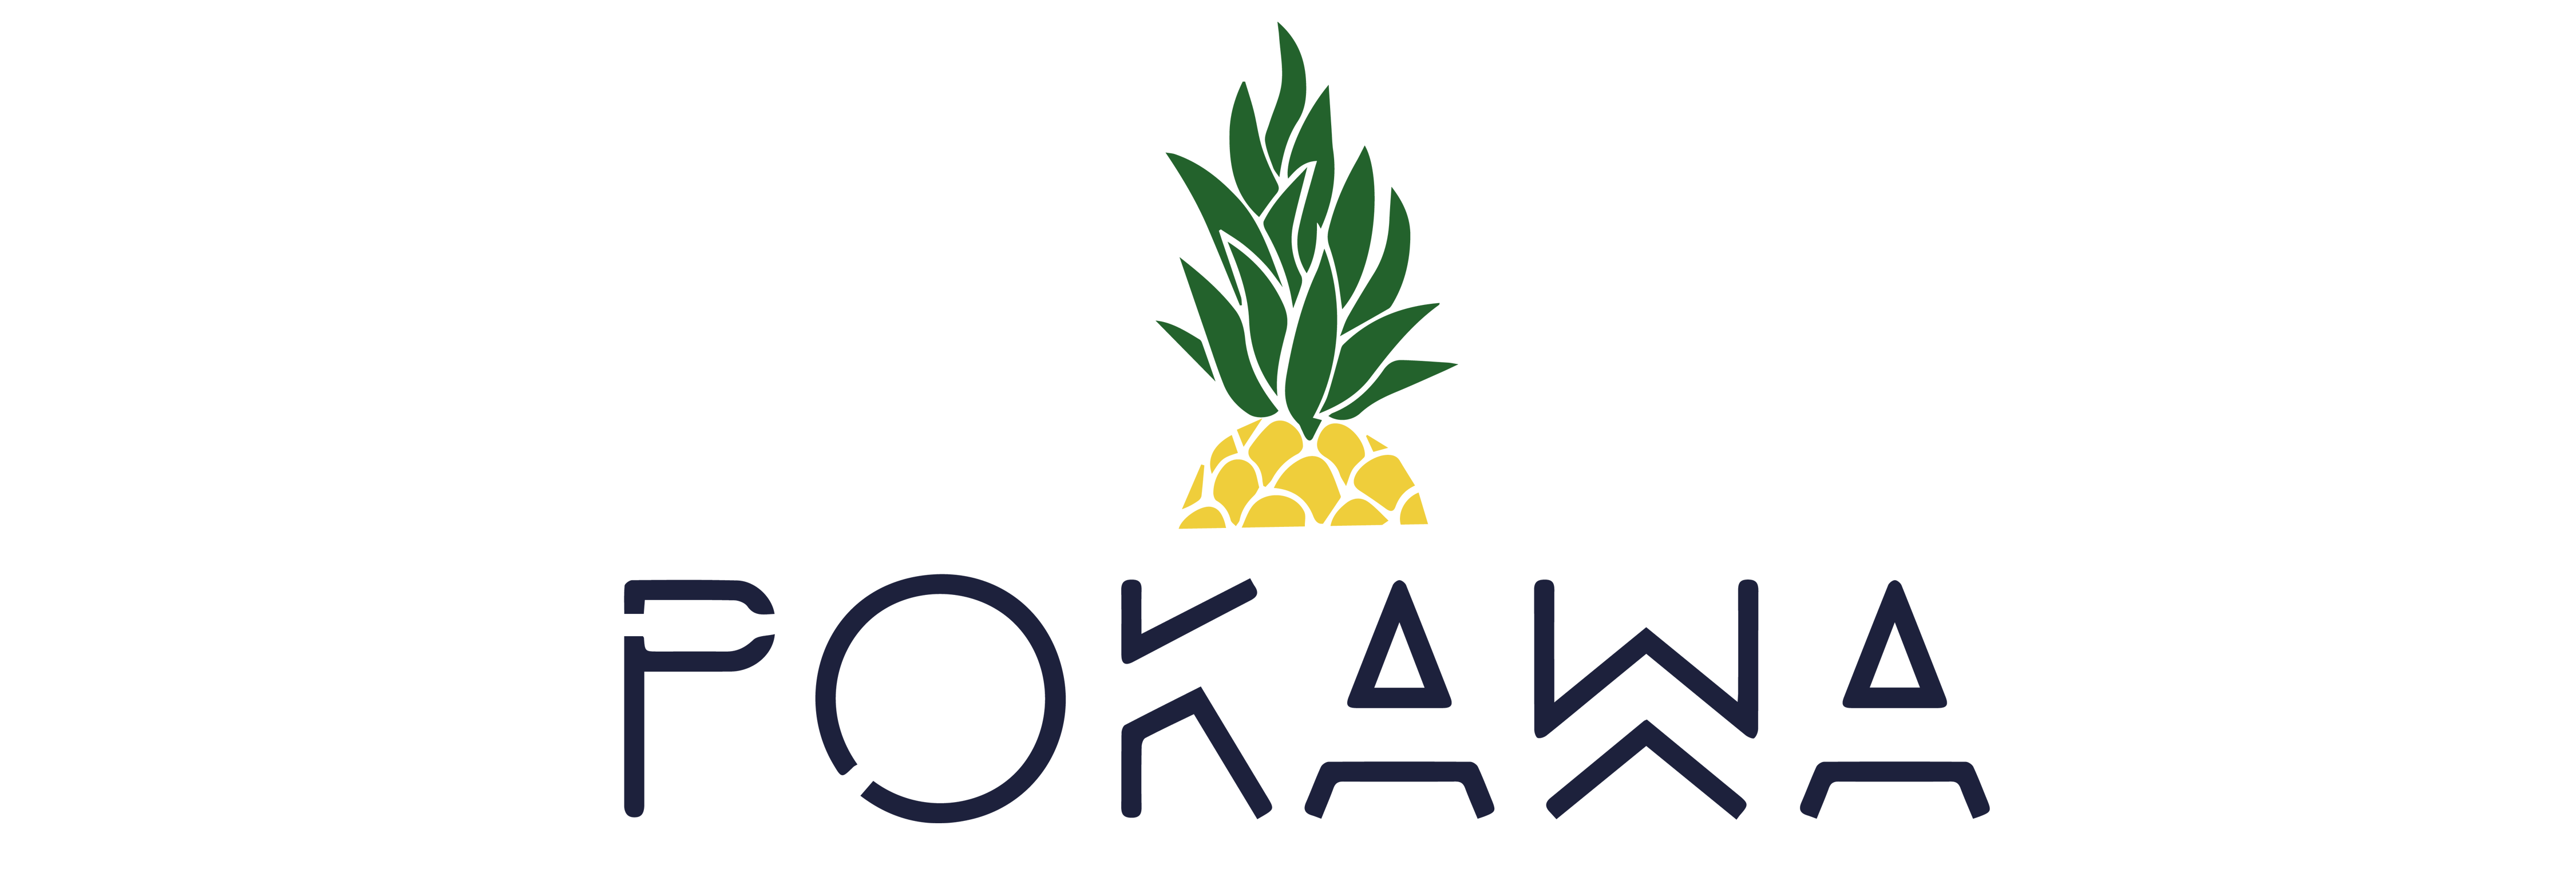 logo Pokawa